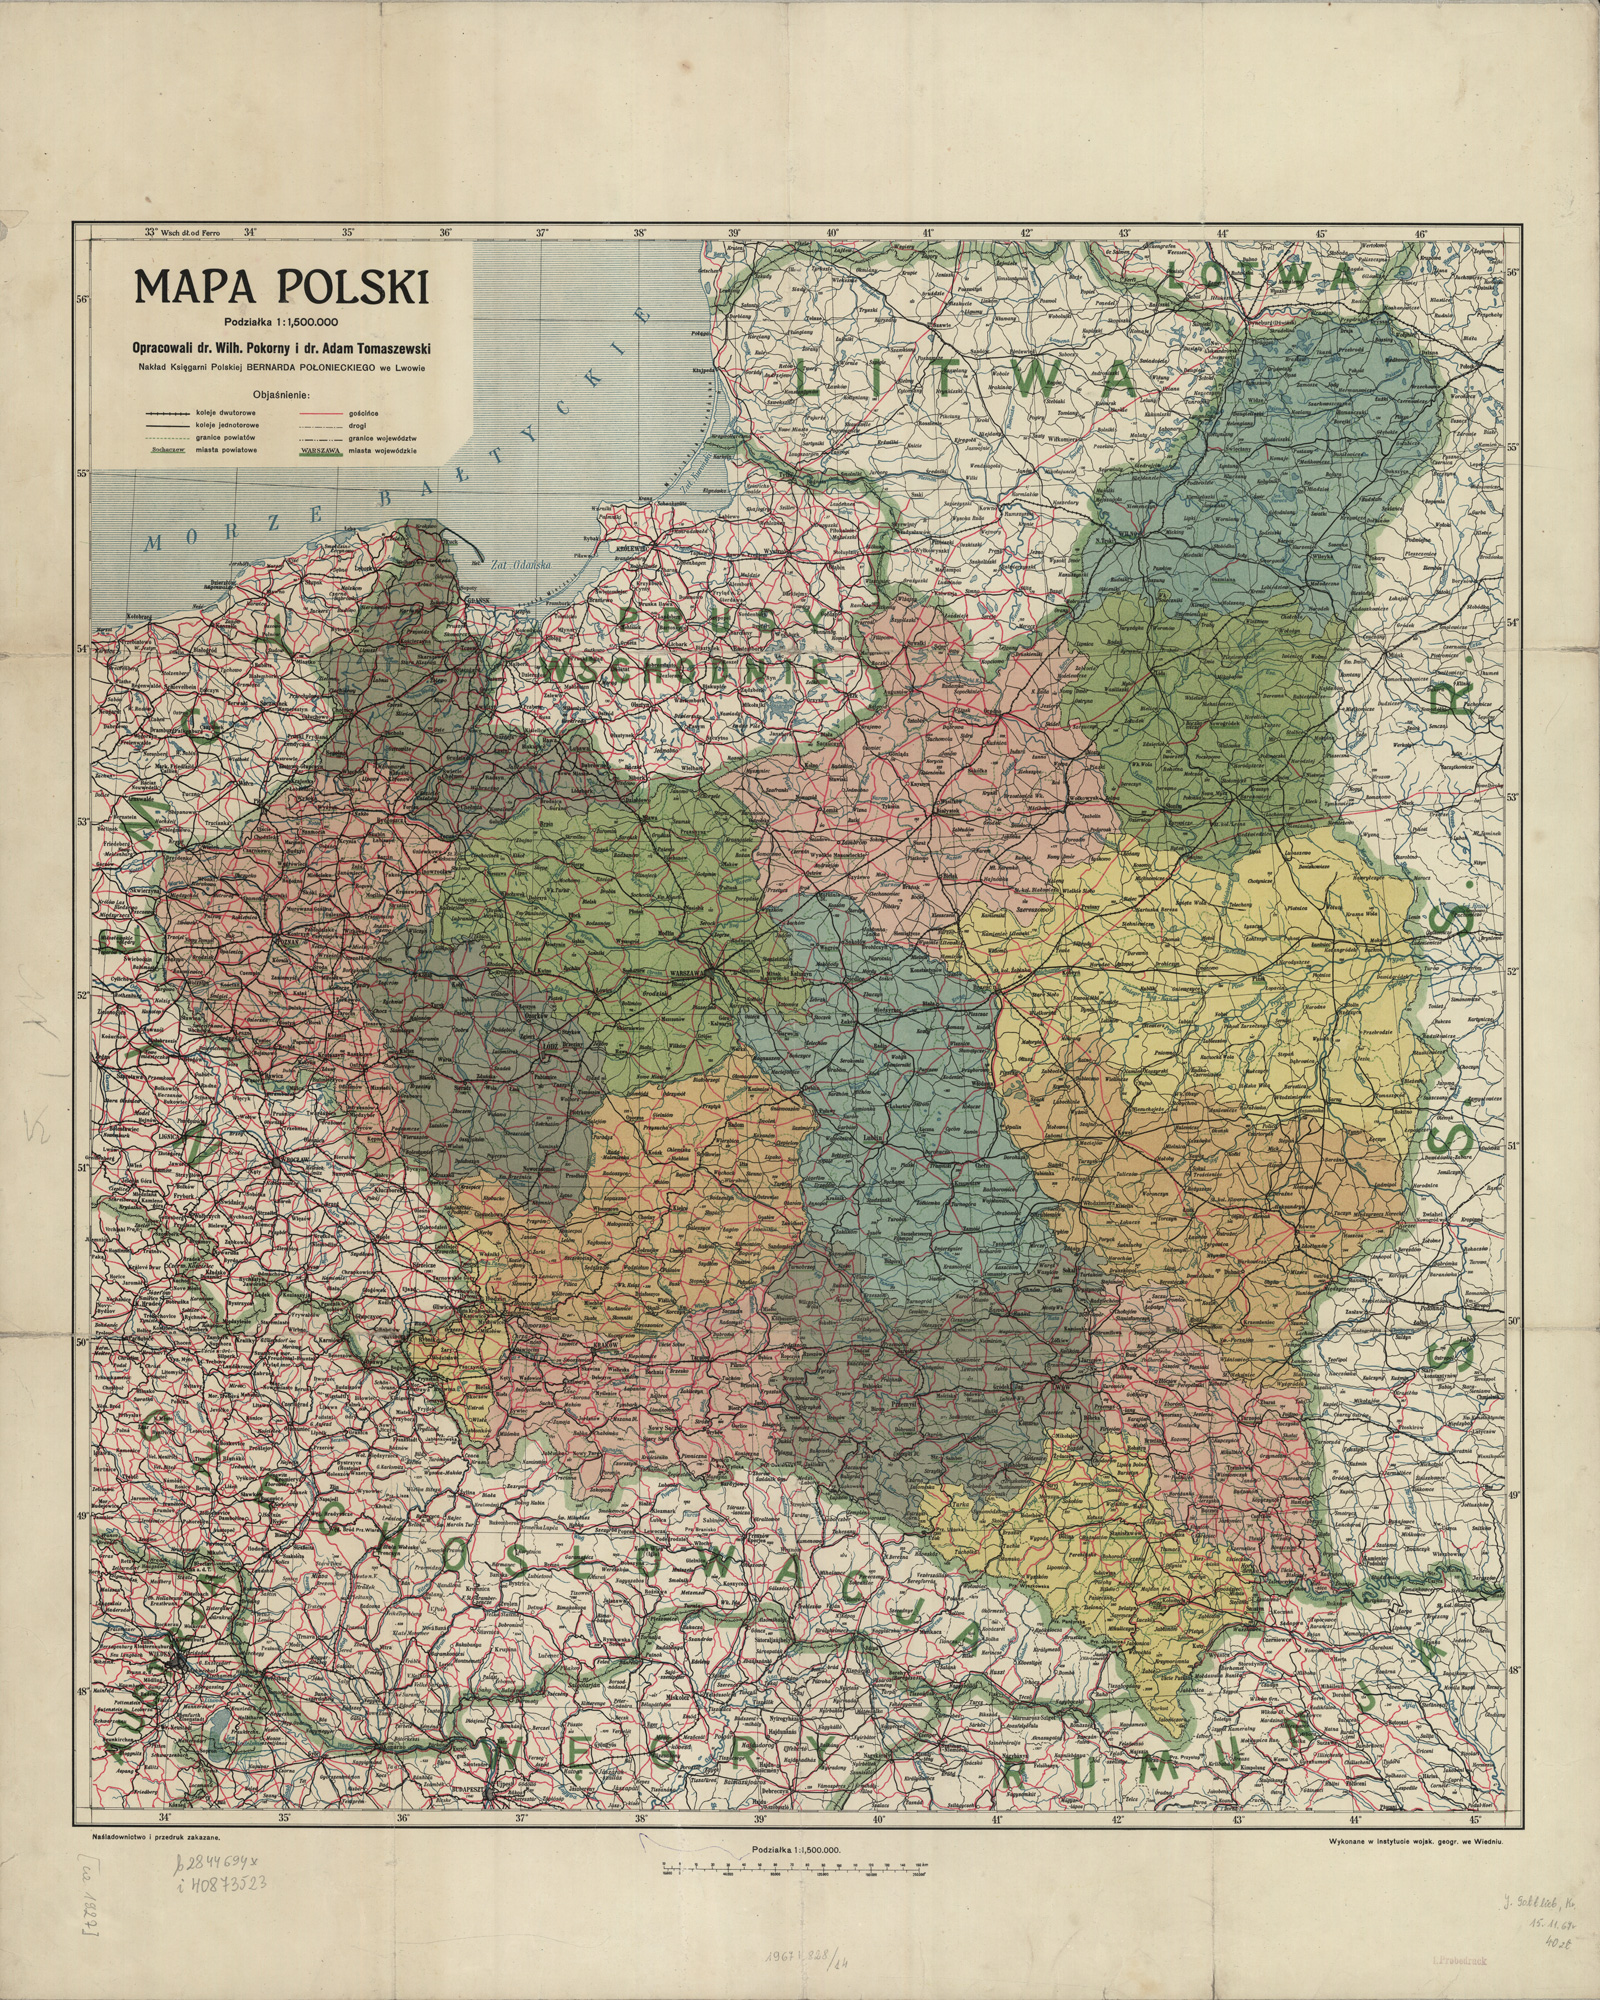 Mapa Polski 1939 фото в формате jpeg, большой выбор 1920×1080 фото